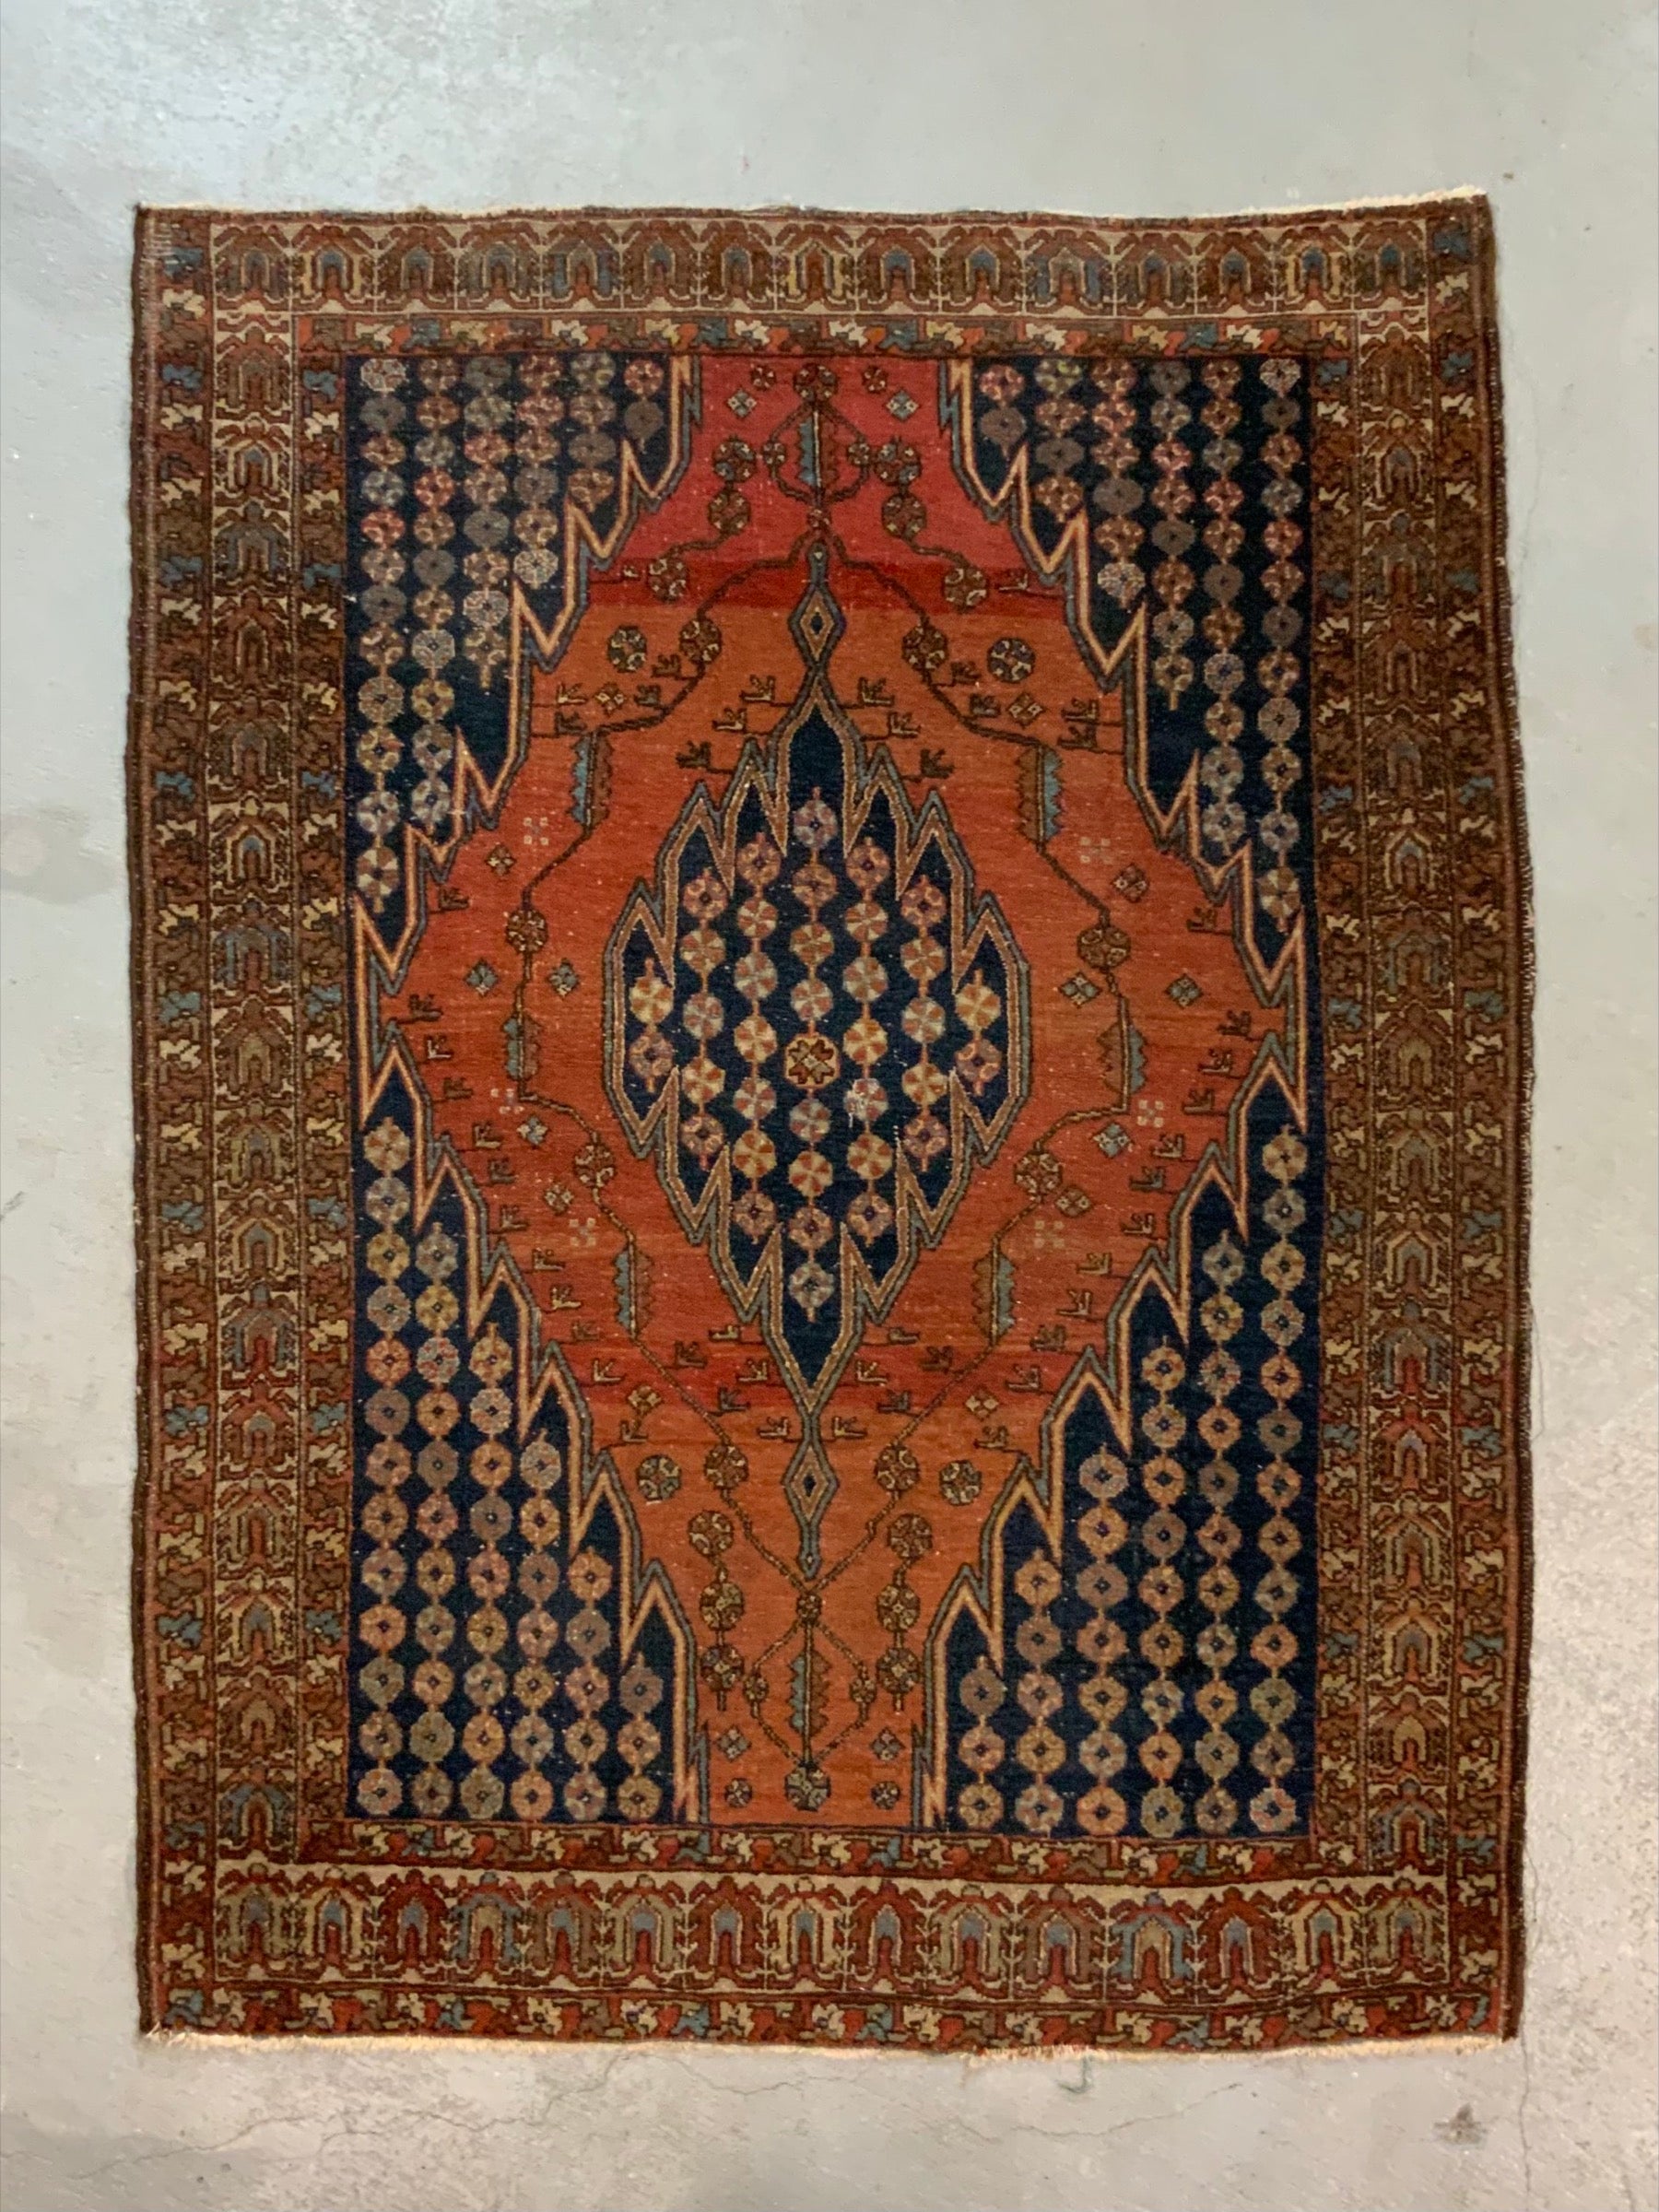 Mazlaghan vintage rug (187 x 142cm)